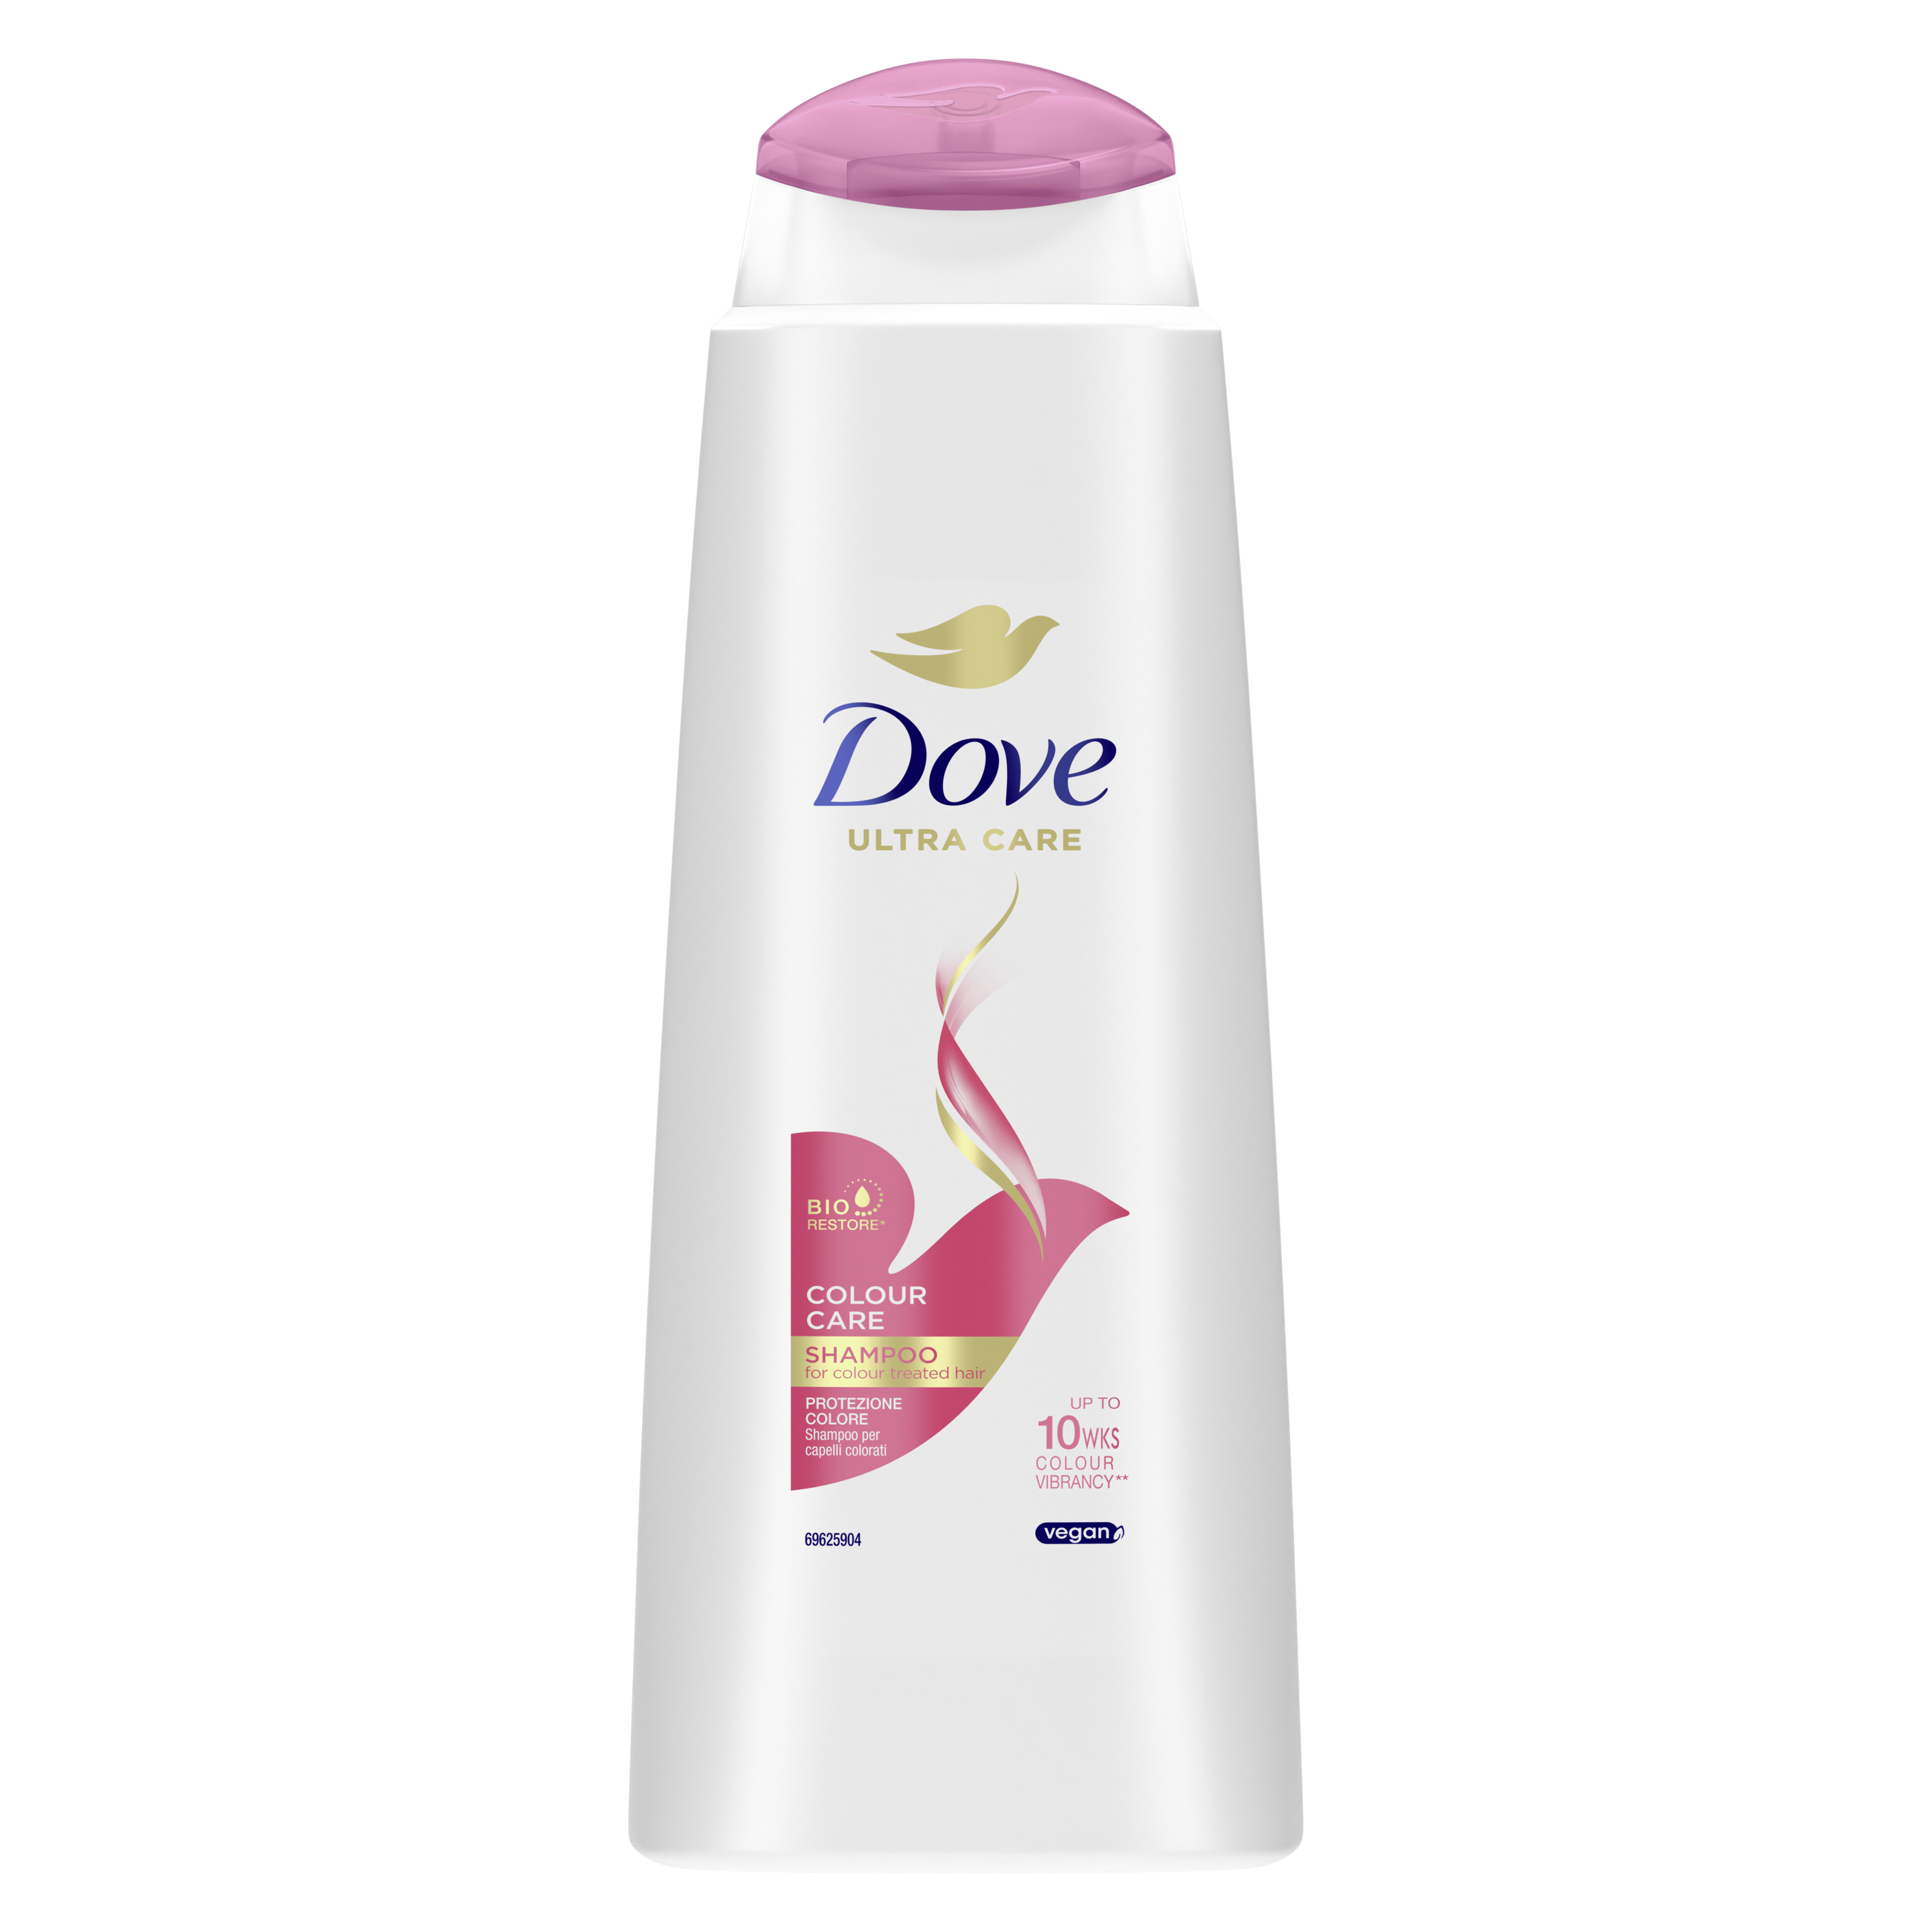 Dove Nutritive Solutions Colour Care Shampoo 400ml